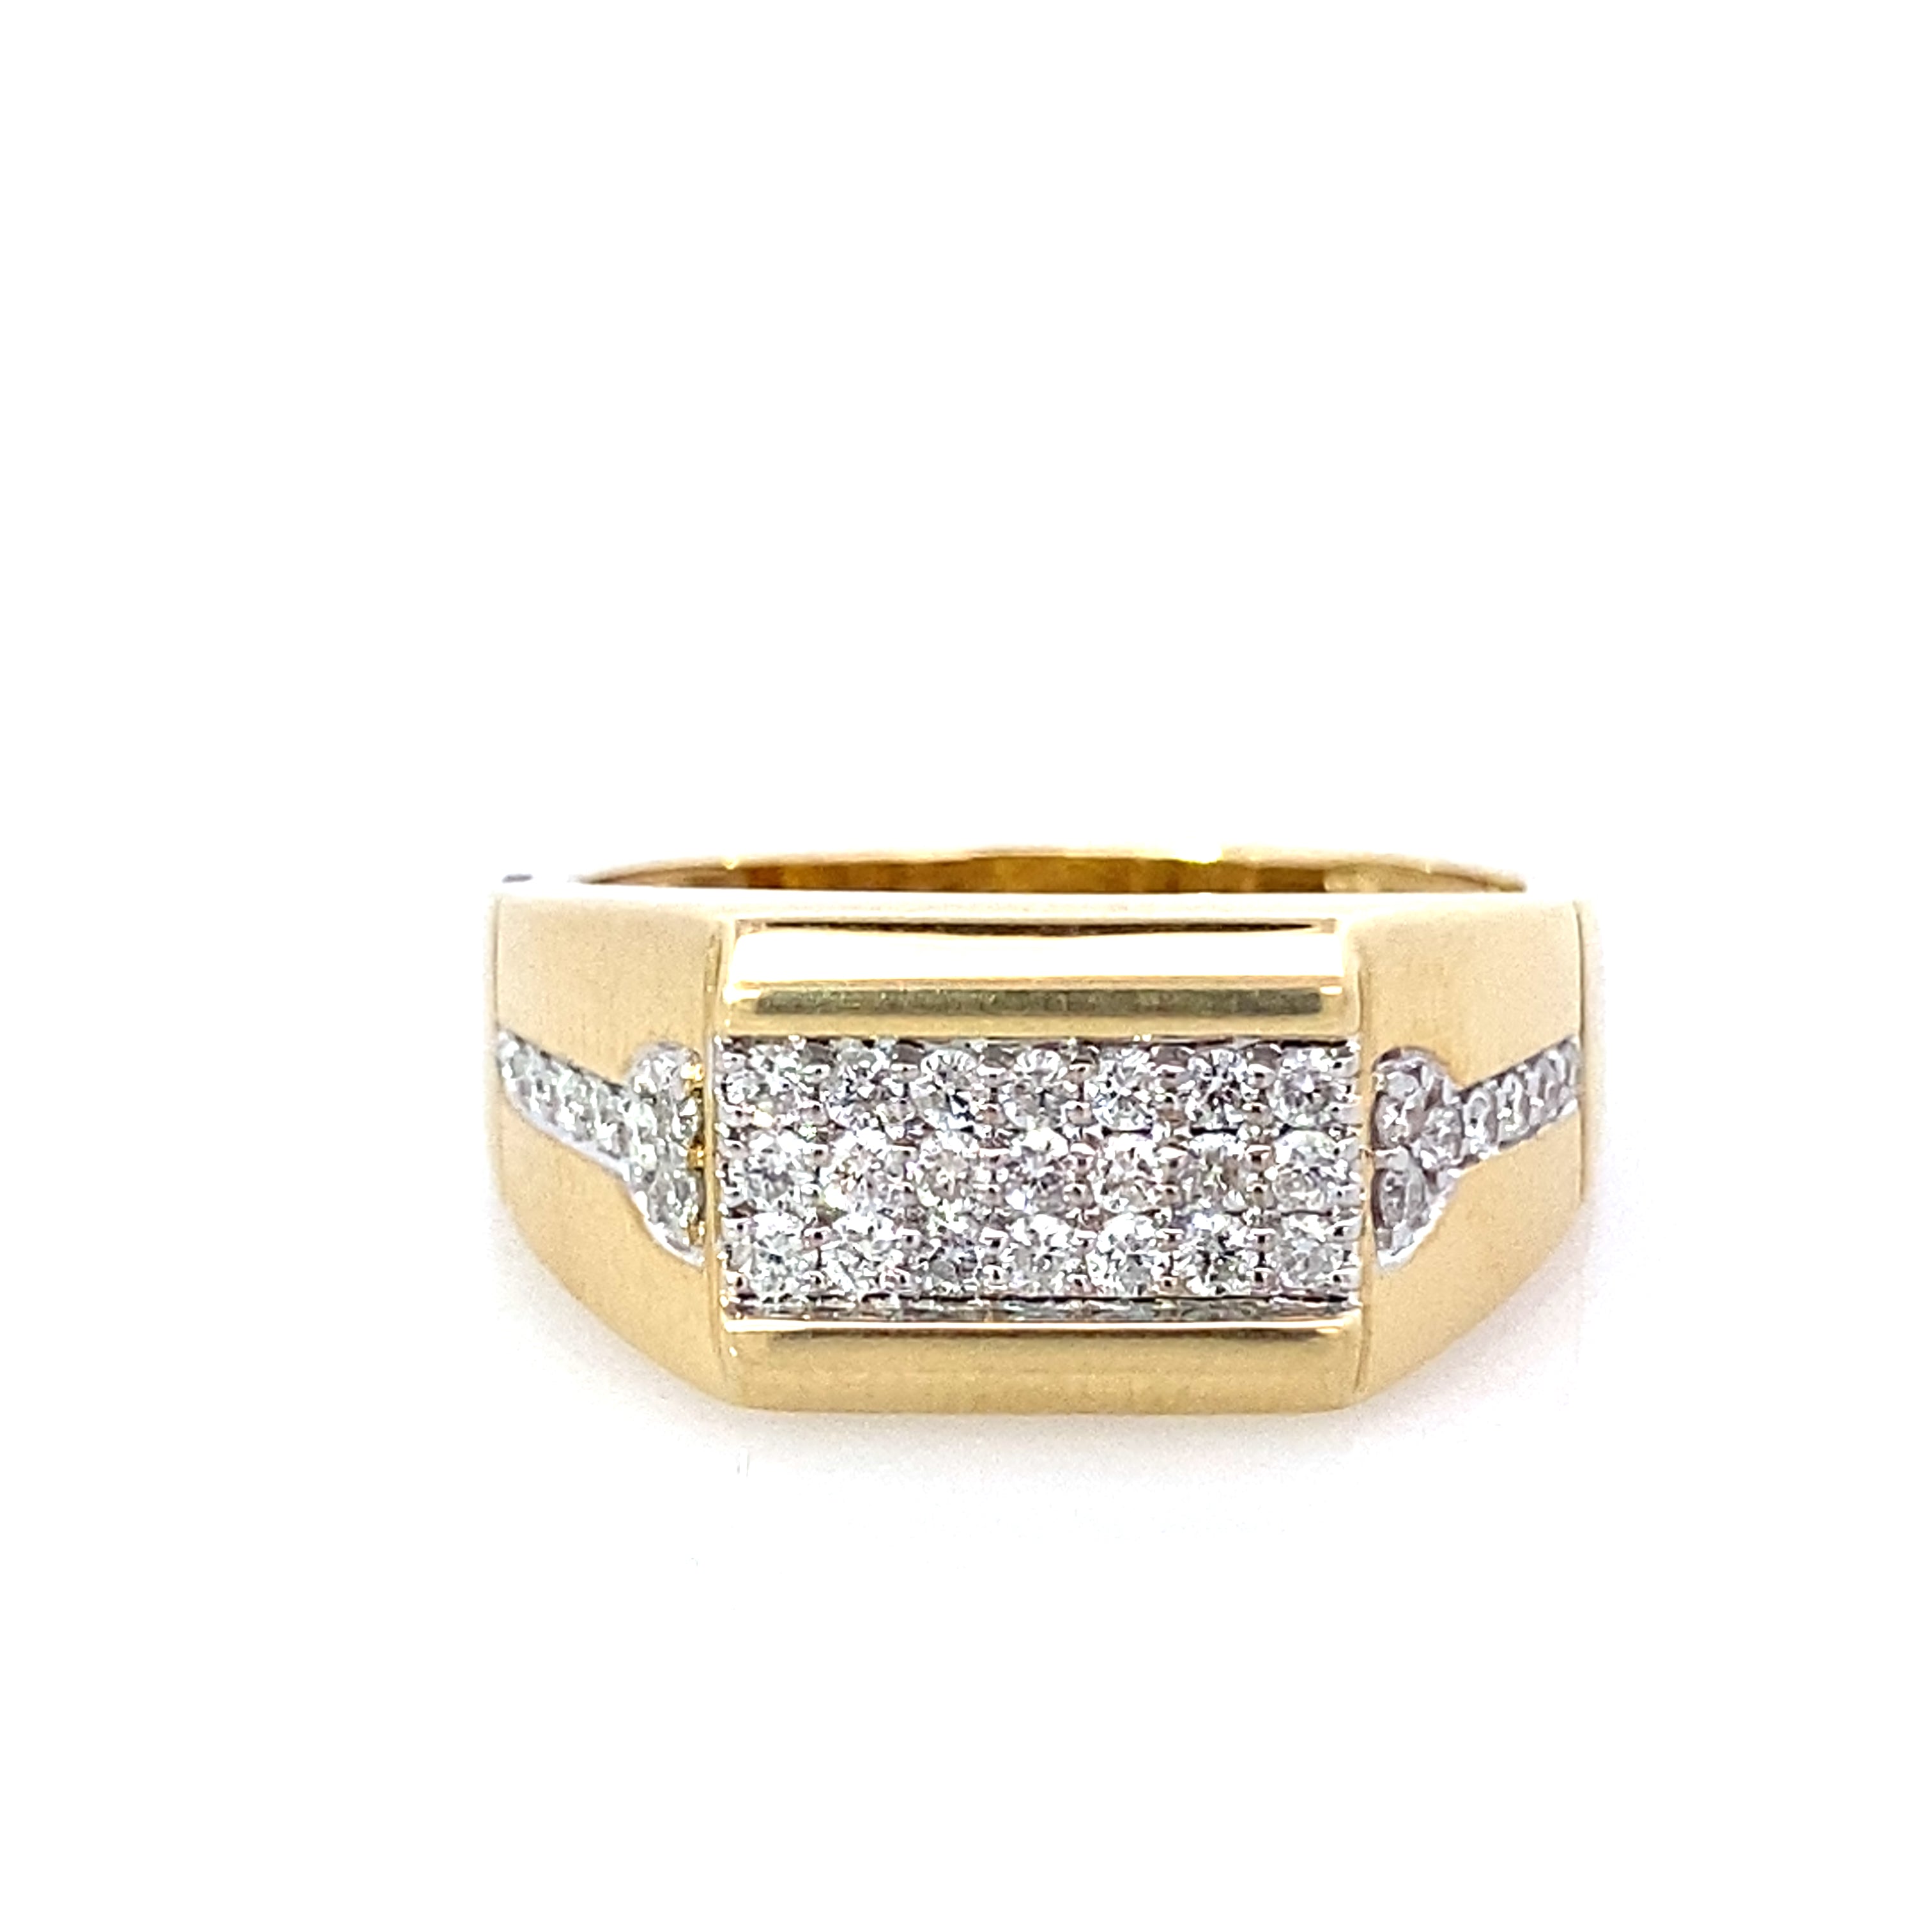 1ct Moissanite Diamond Men's Wedding Ring from Black Diamonds New York